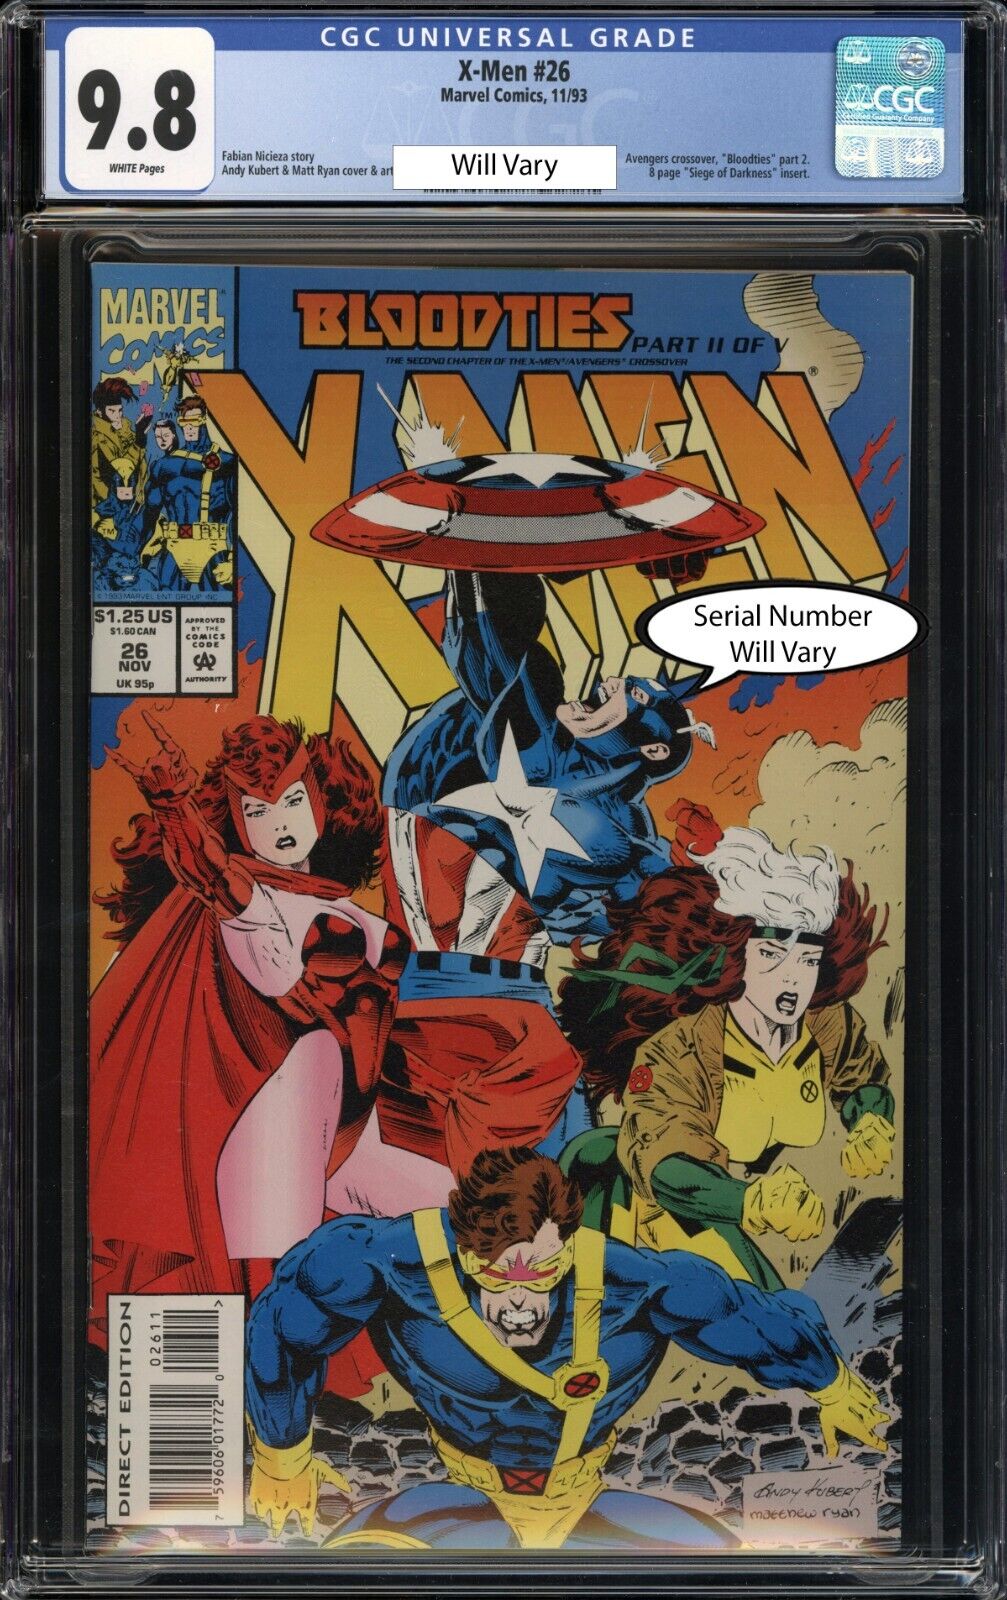 X-Men #26 CGC 9.8 1993 Captain America Rouge scarlet Witch MCU TheGradedComic